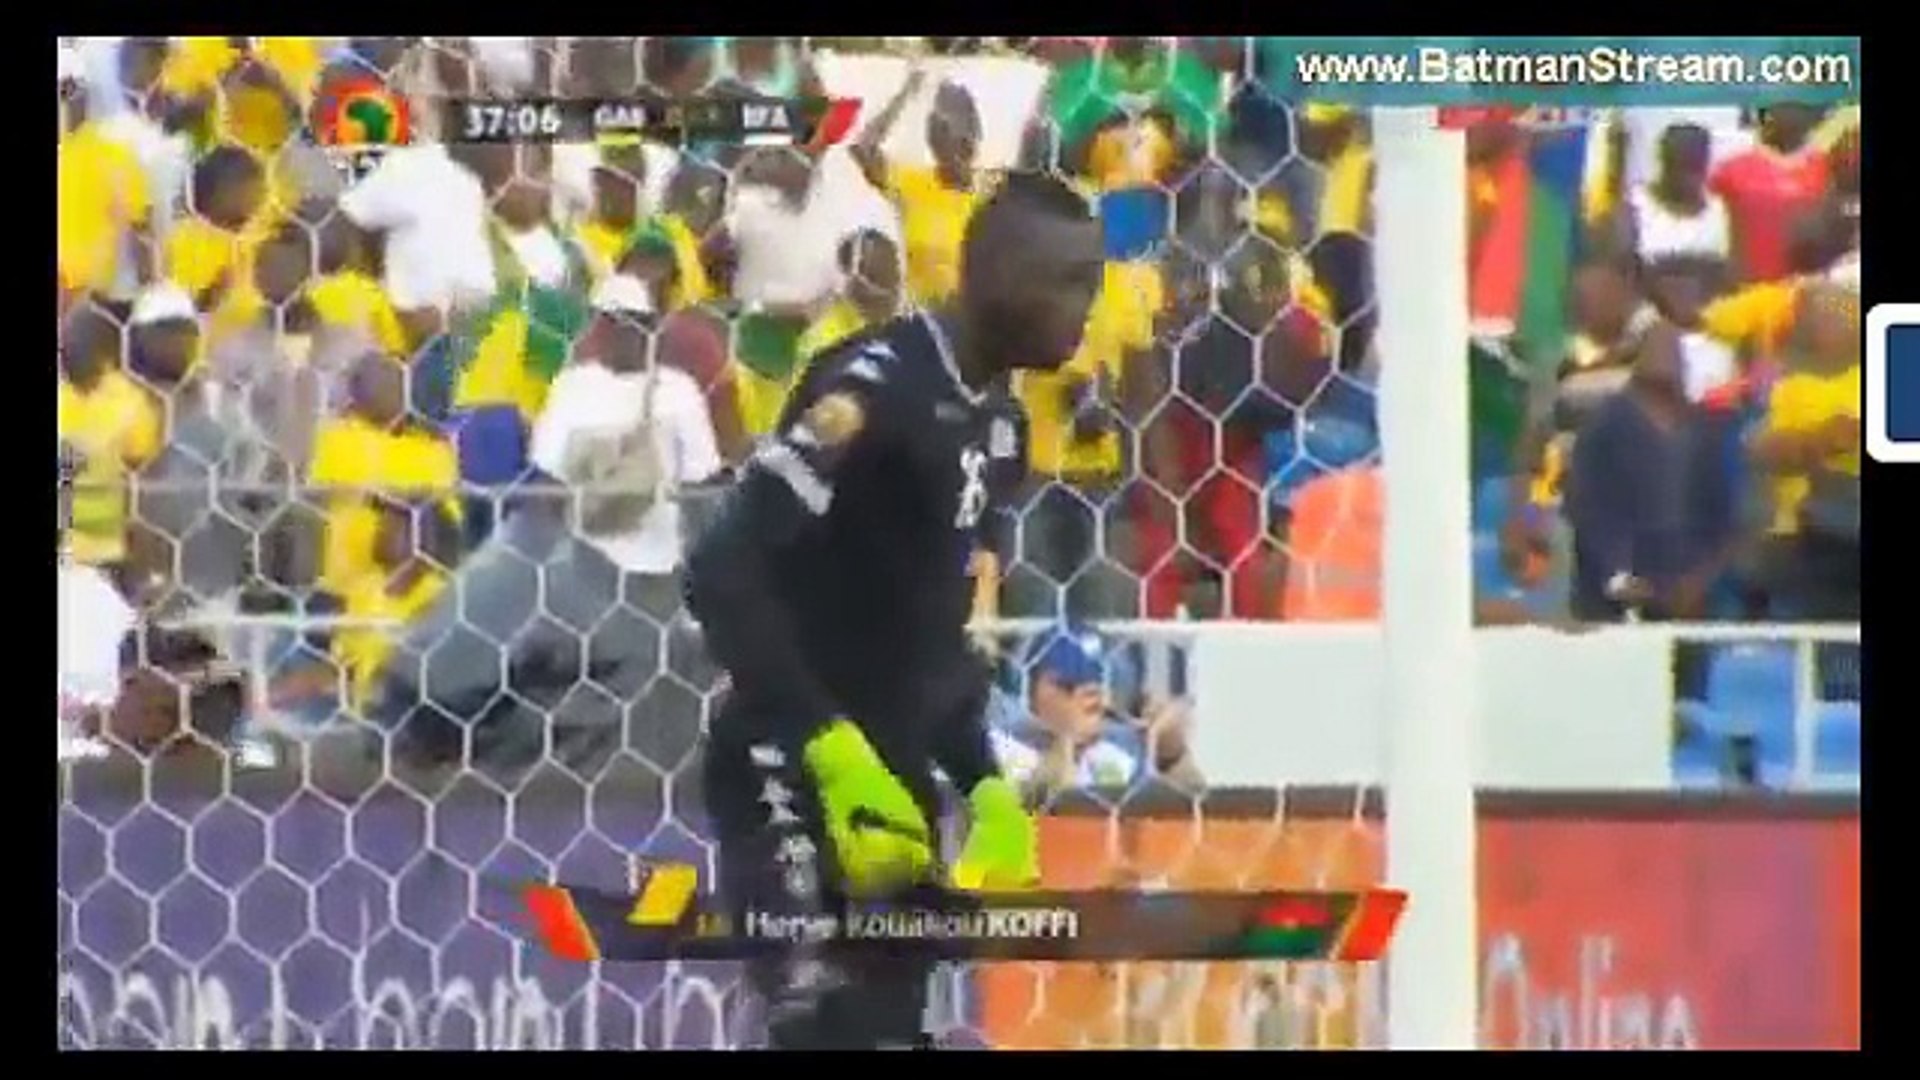 Gabon vs Burkina faso - 1-1 - Aubameyang pénaltis